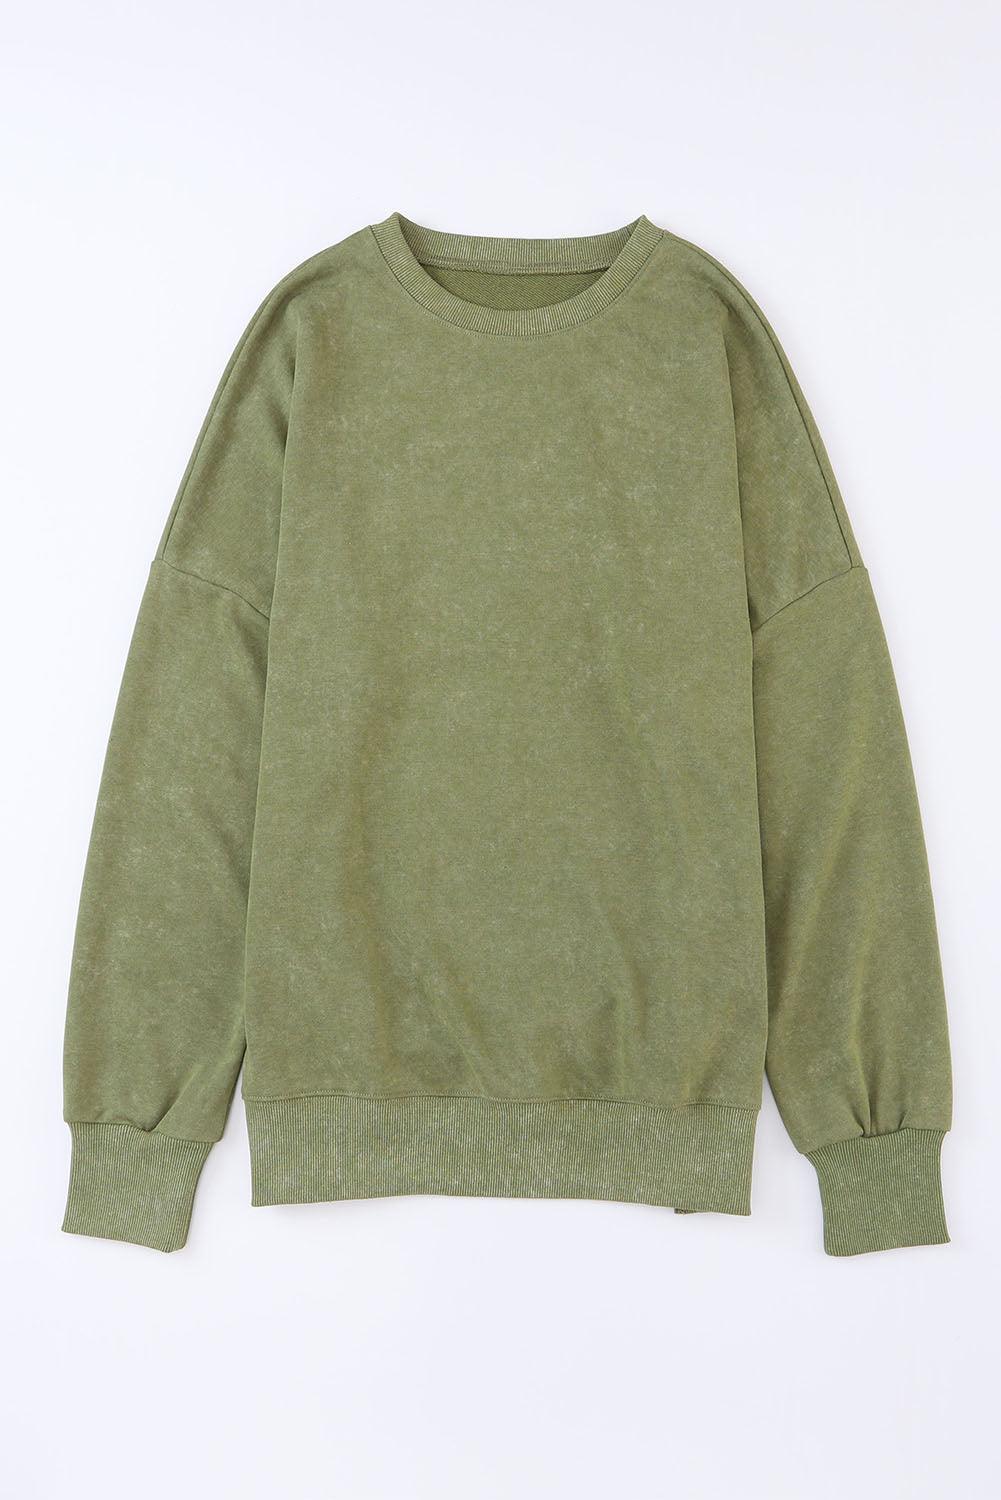 Green Plain Drop Shoulder Ribbed Trim Oversized Sweatshirt - Vesteeto